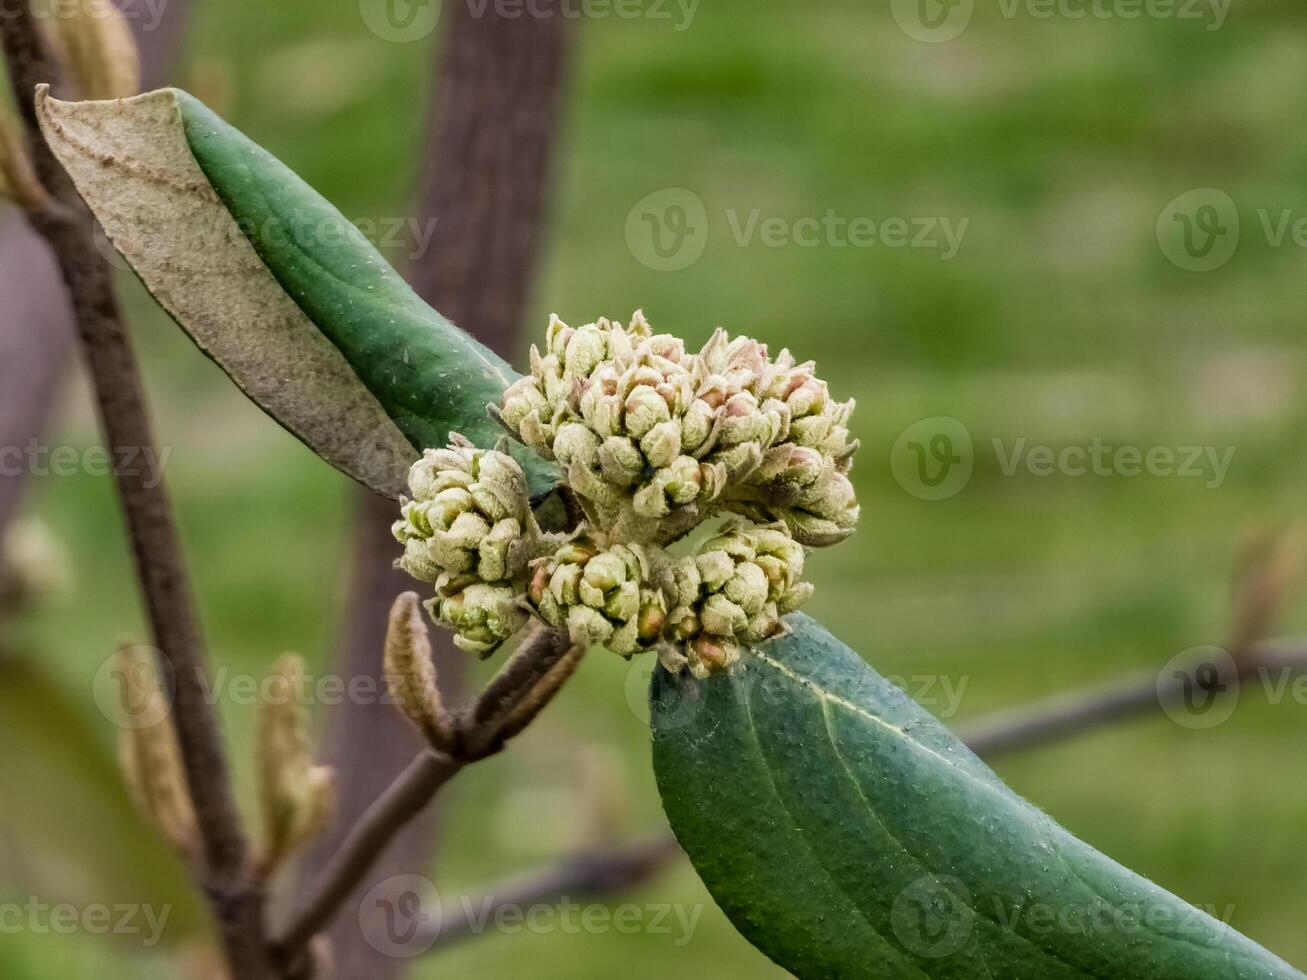 flor brotos do folha de couro viburno, viburnum ritidofilo dentro cedo Primavera. foto